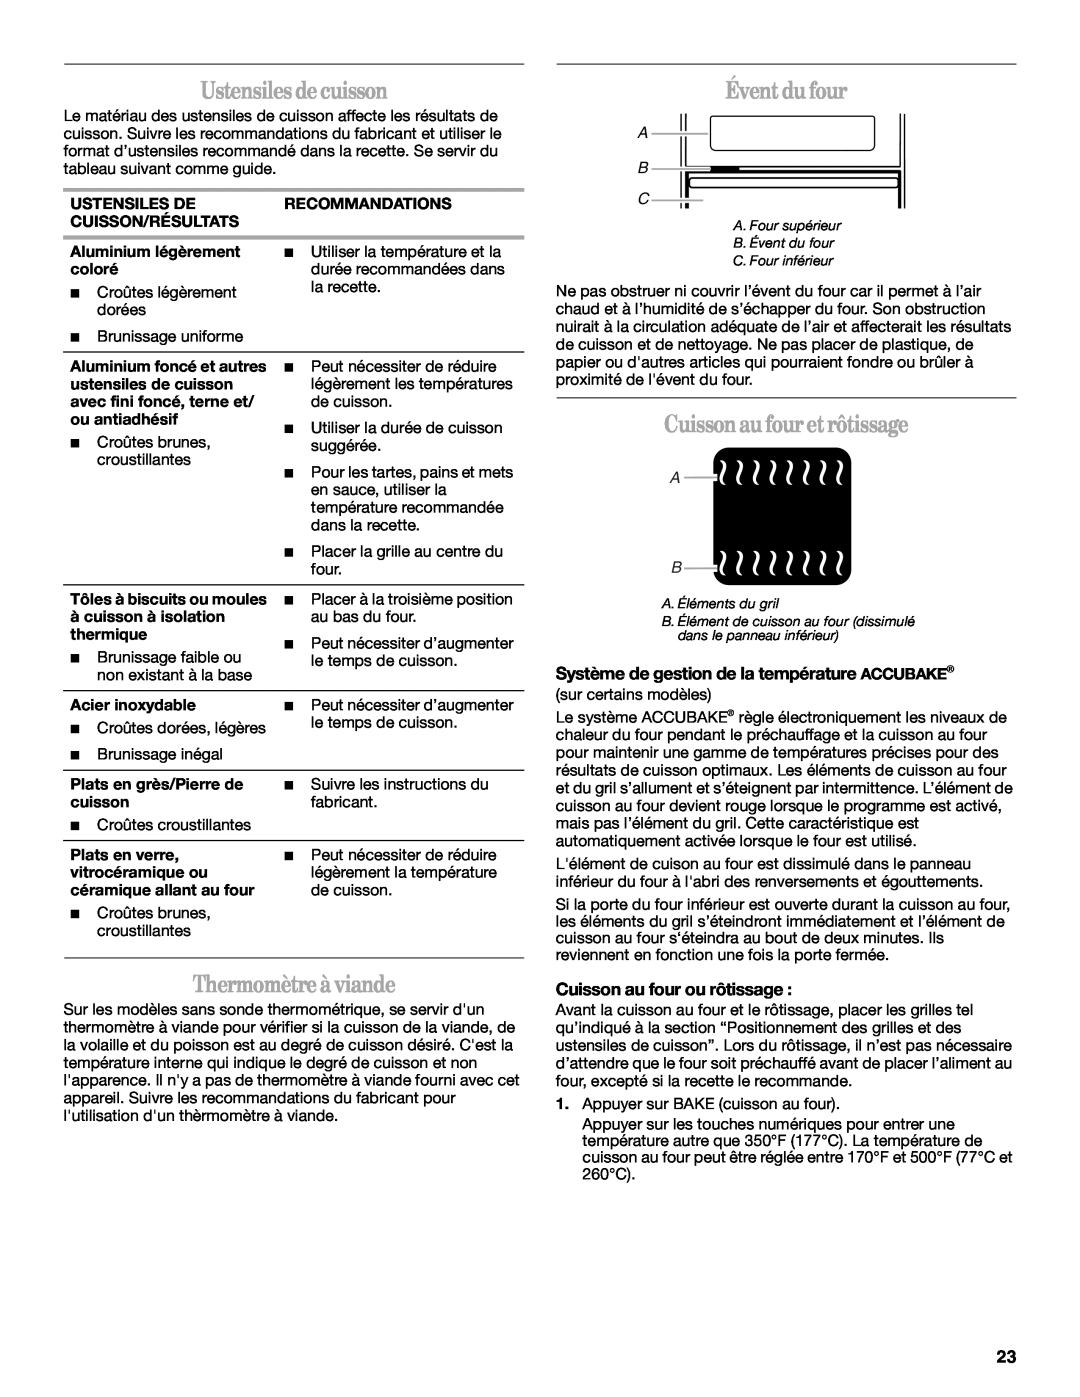 Whirlpool GSC309 manual Ustensiles decuisson, Thermomètreà viande, Éventdufour, Cuissonaufouretrôtissage, A B C 